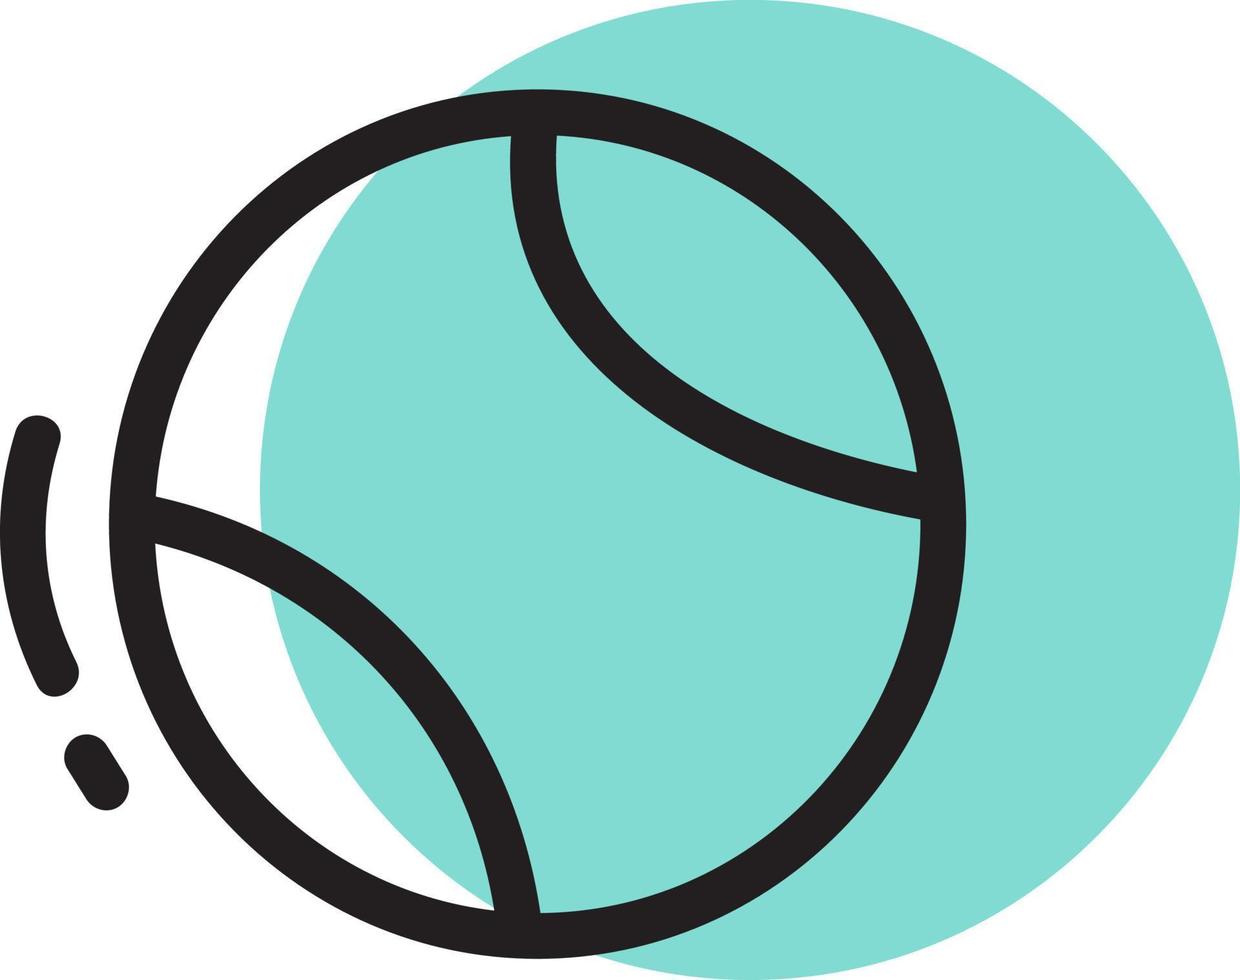 Tennis ball, illustration, vector on white background.